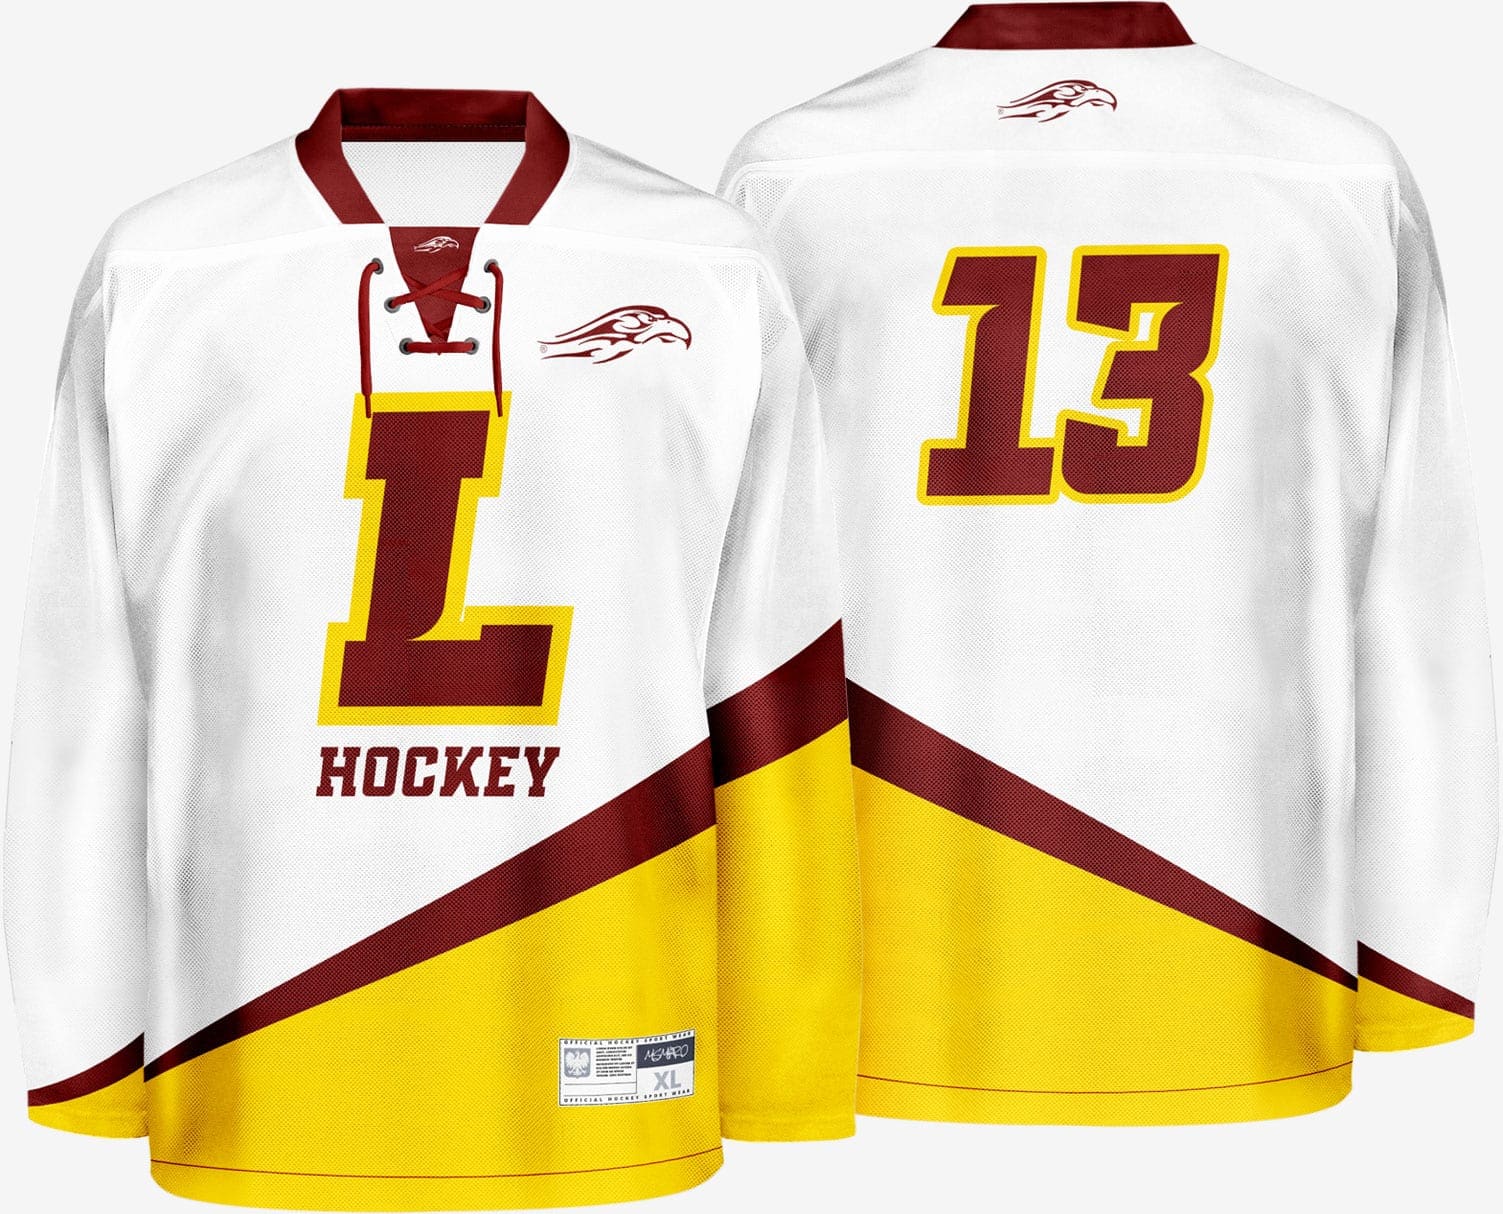 Hockey Jersey Design